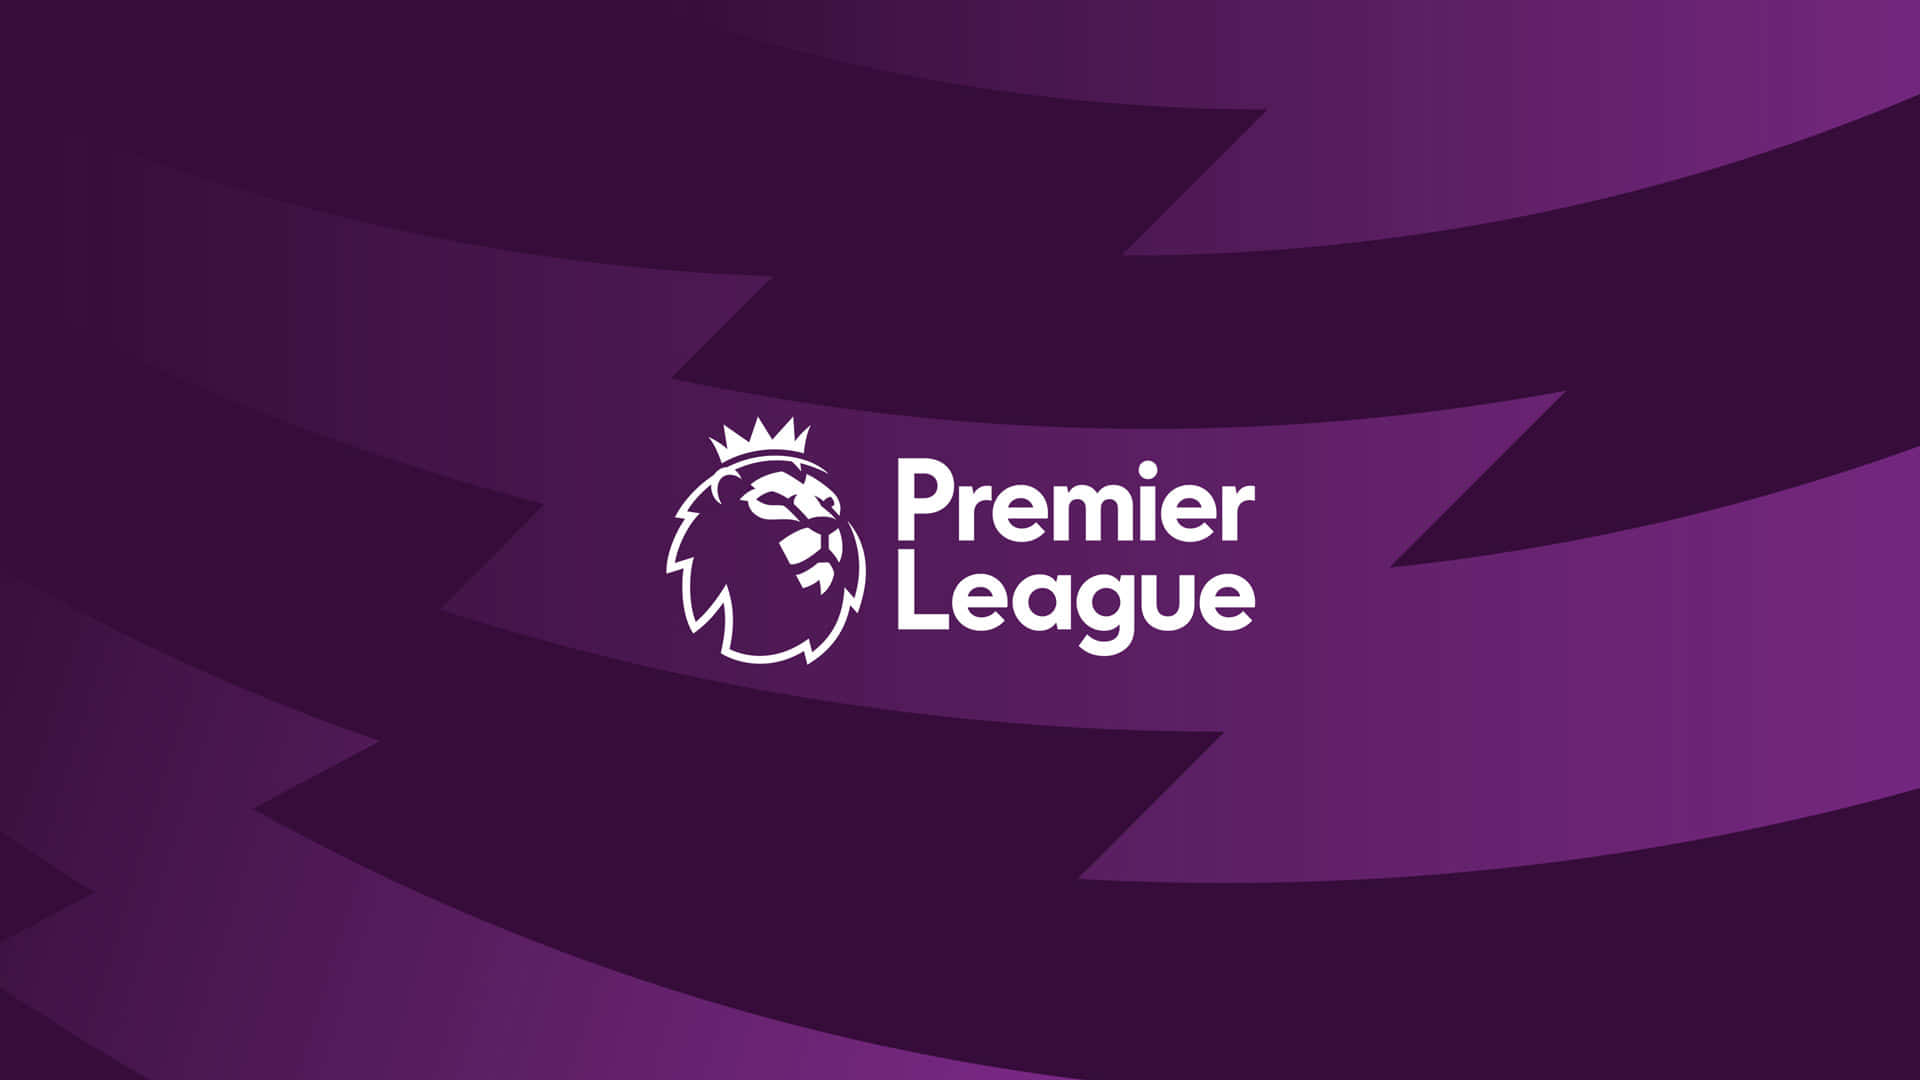 Premier League - The Best Soccer League in the World